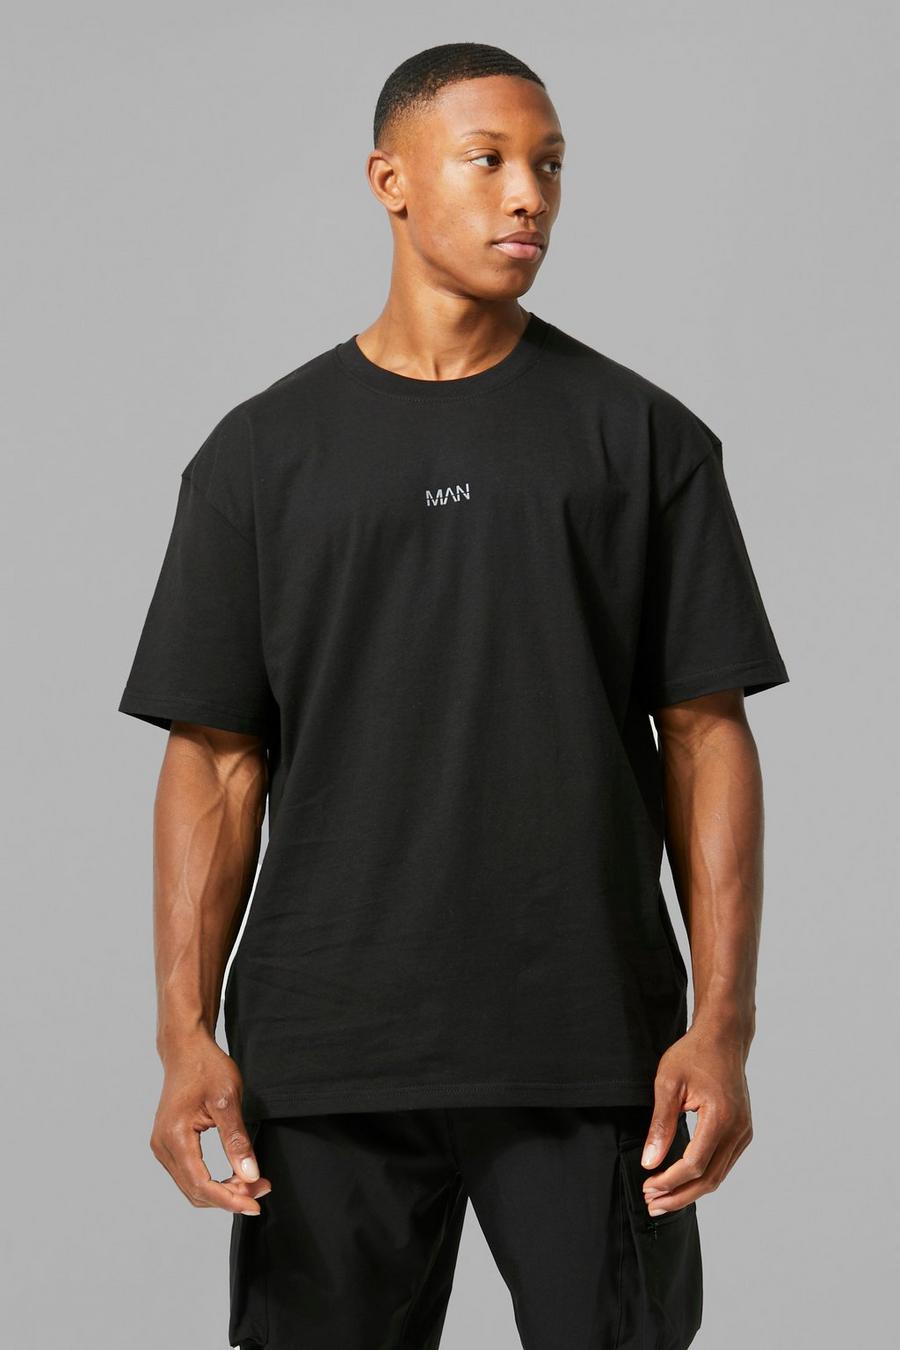 Man Active Oversize Gym Basic T-Shirt, Black schwarz